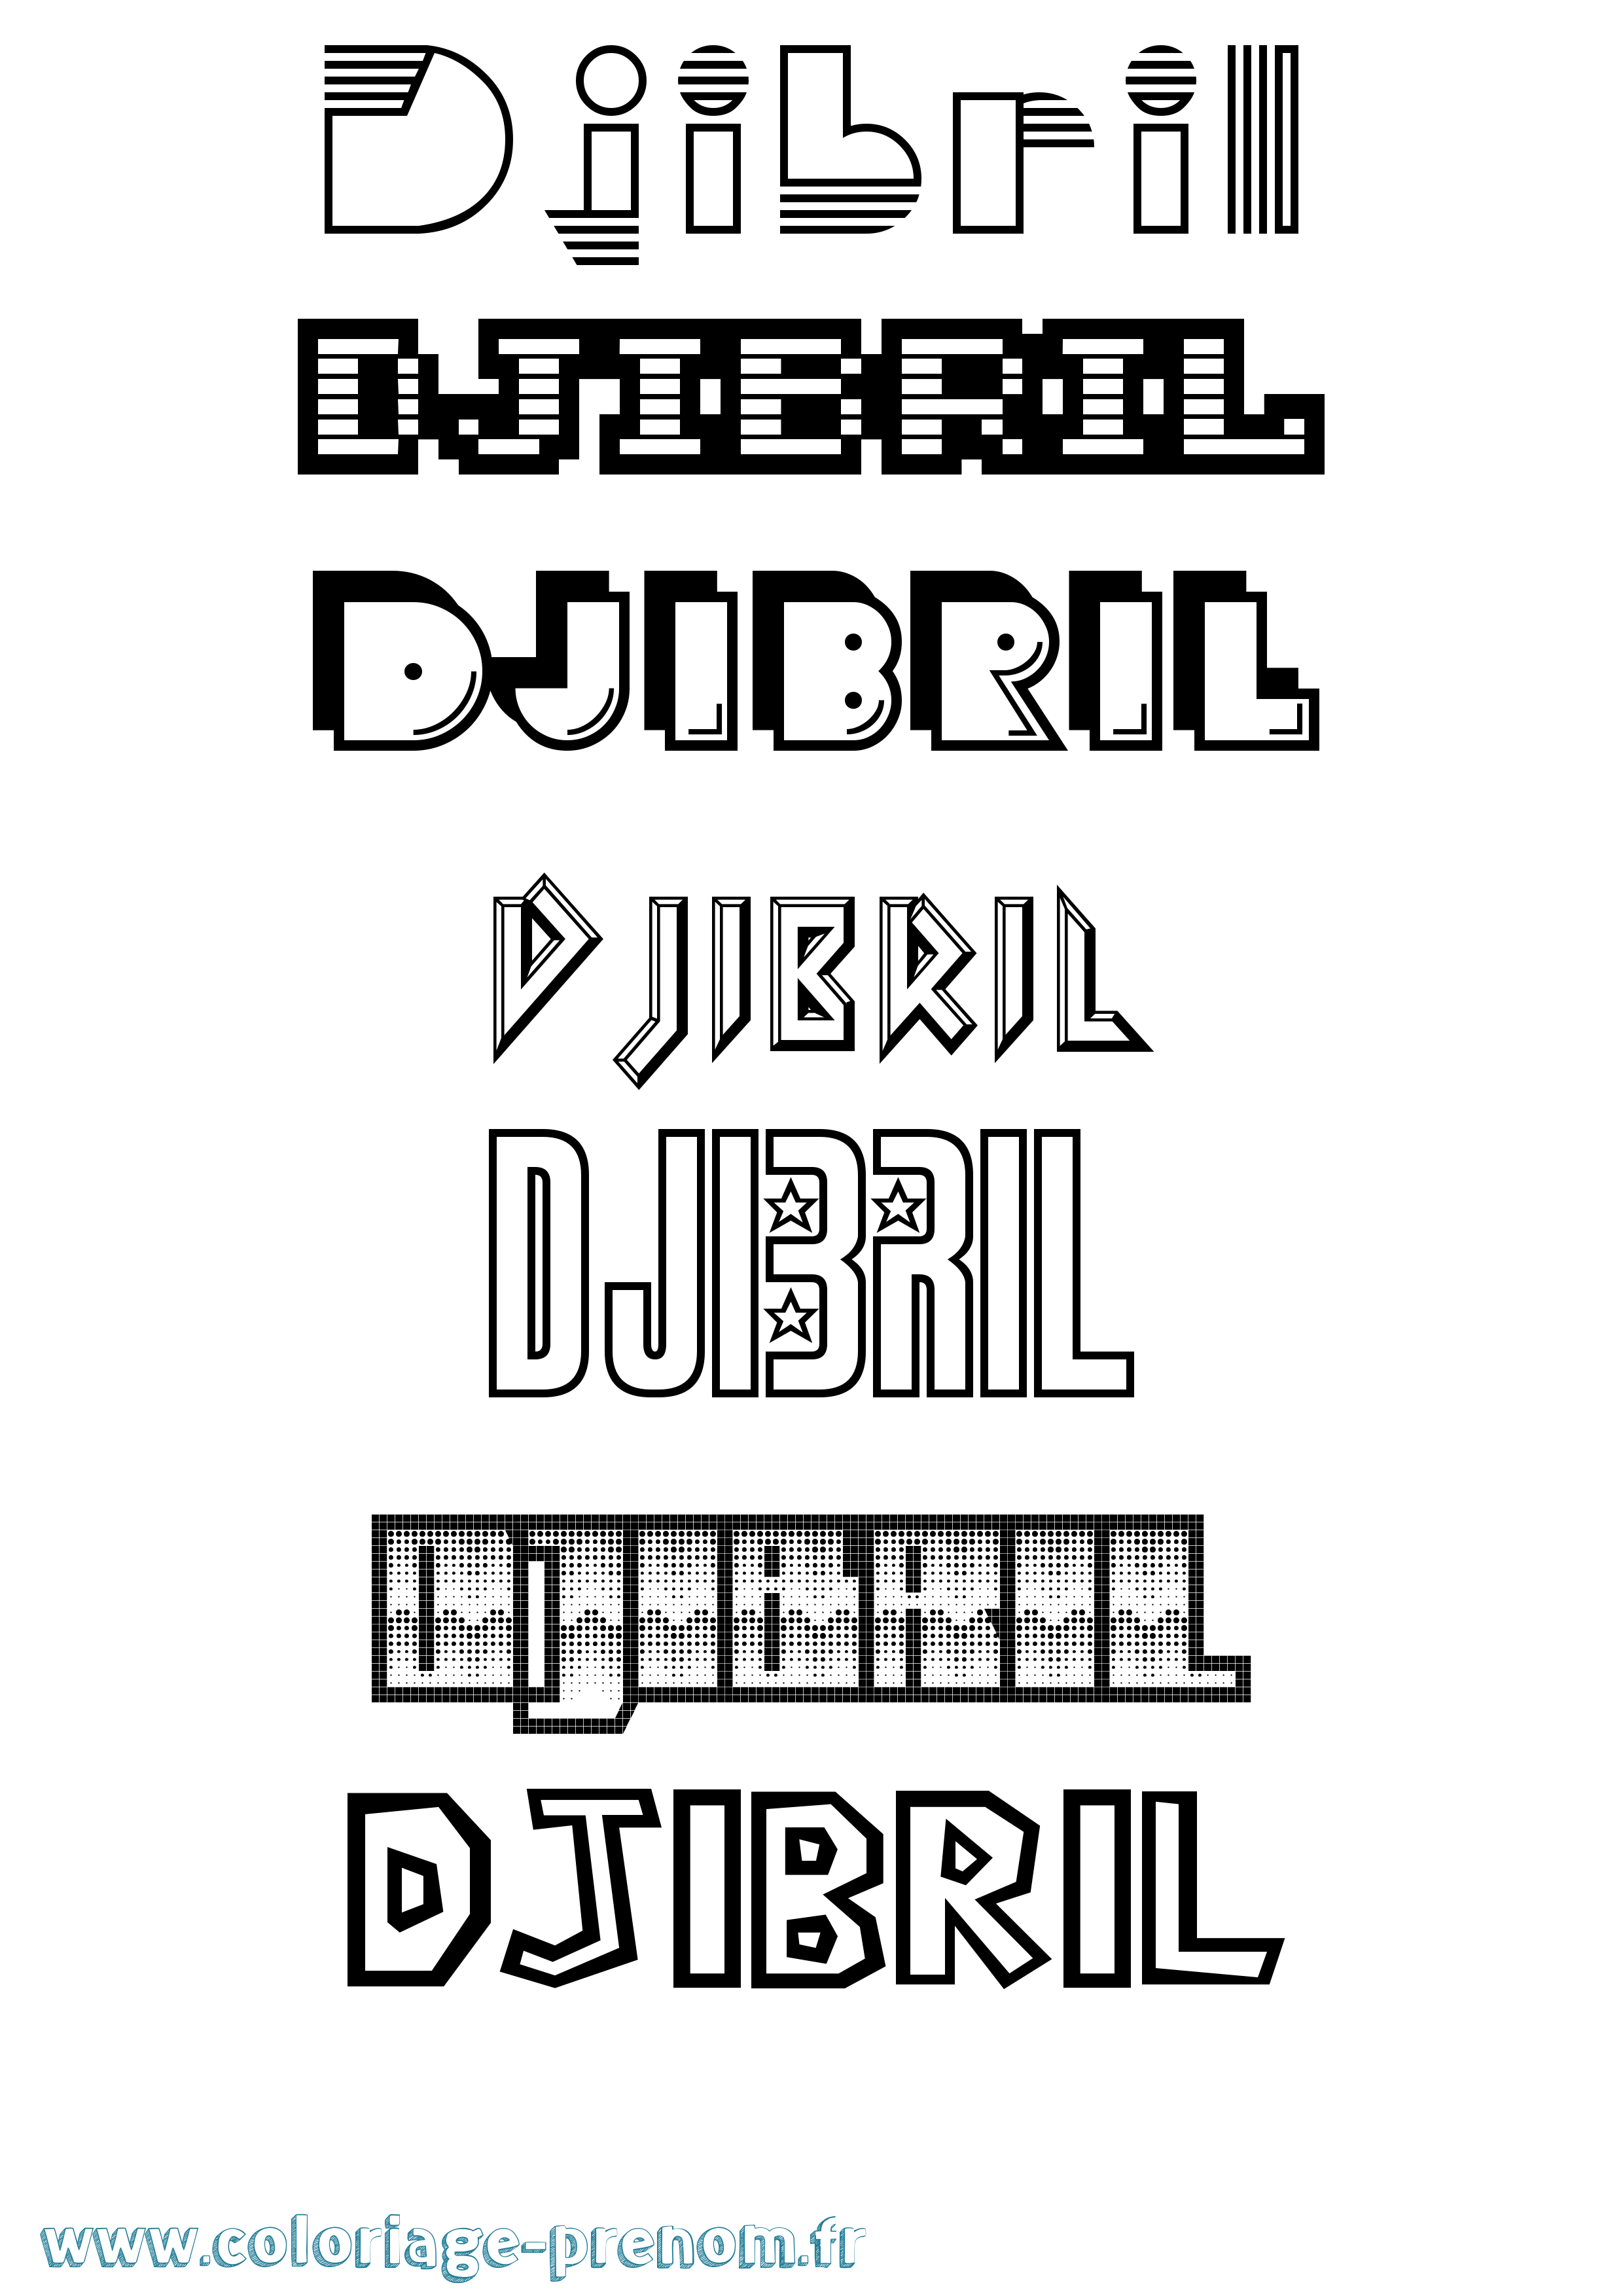 Coloriage prénom Djibril